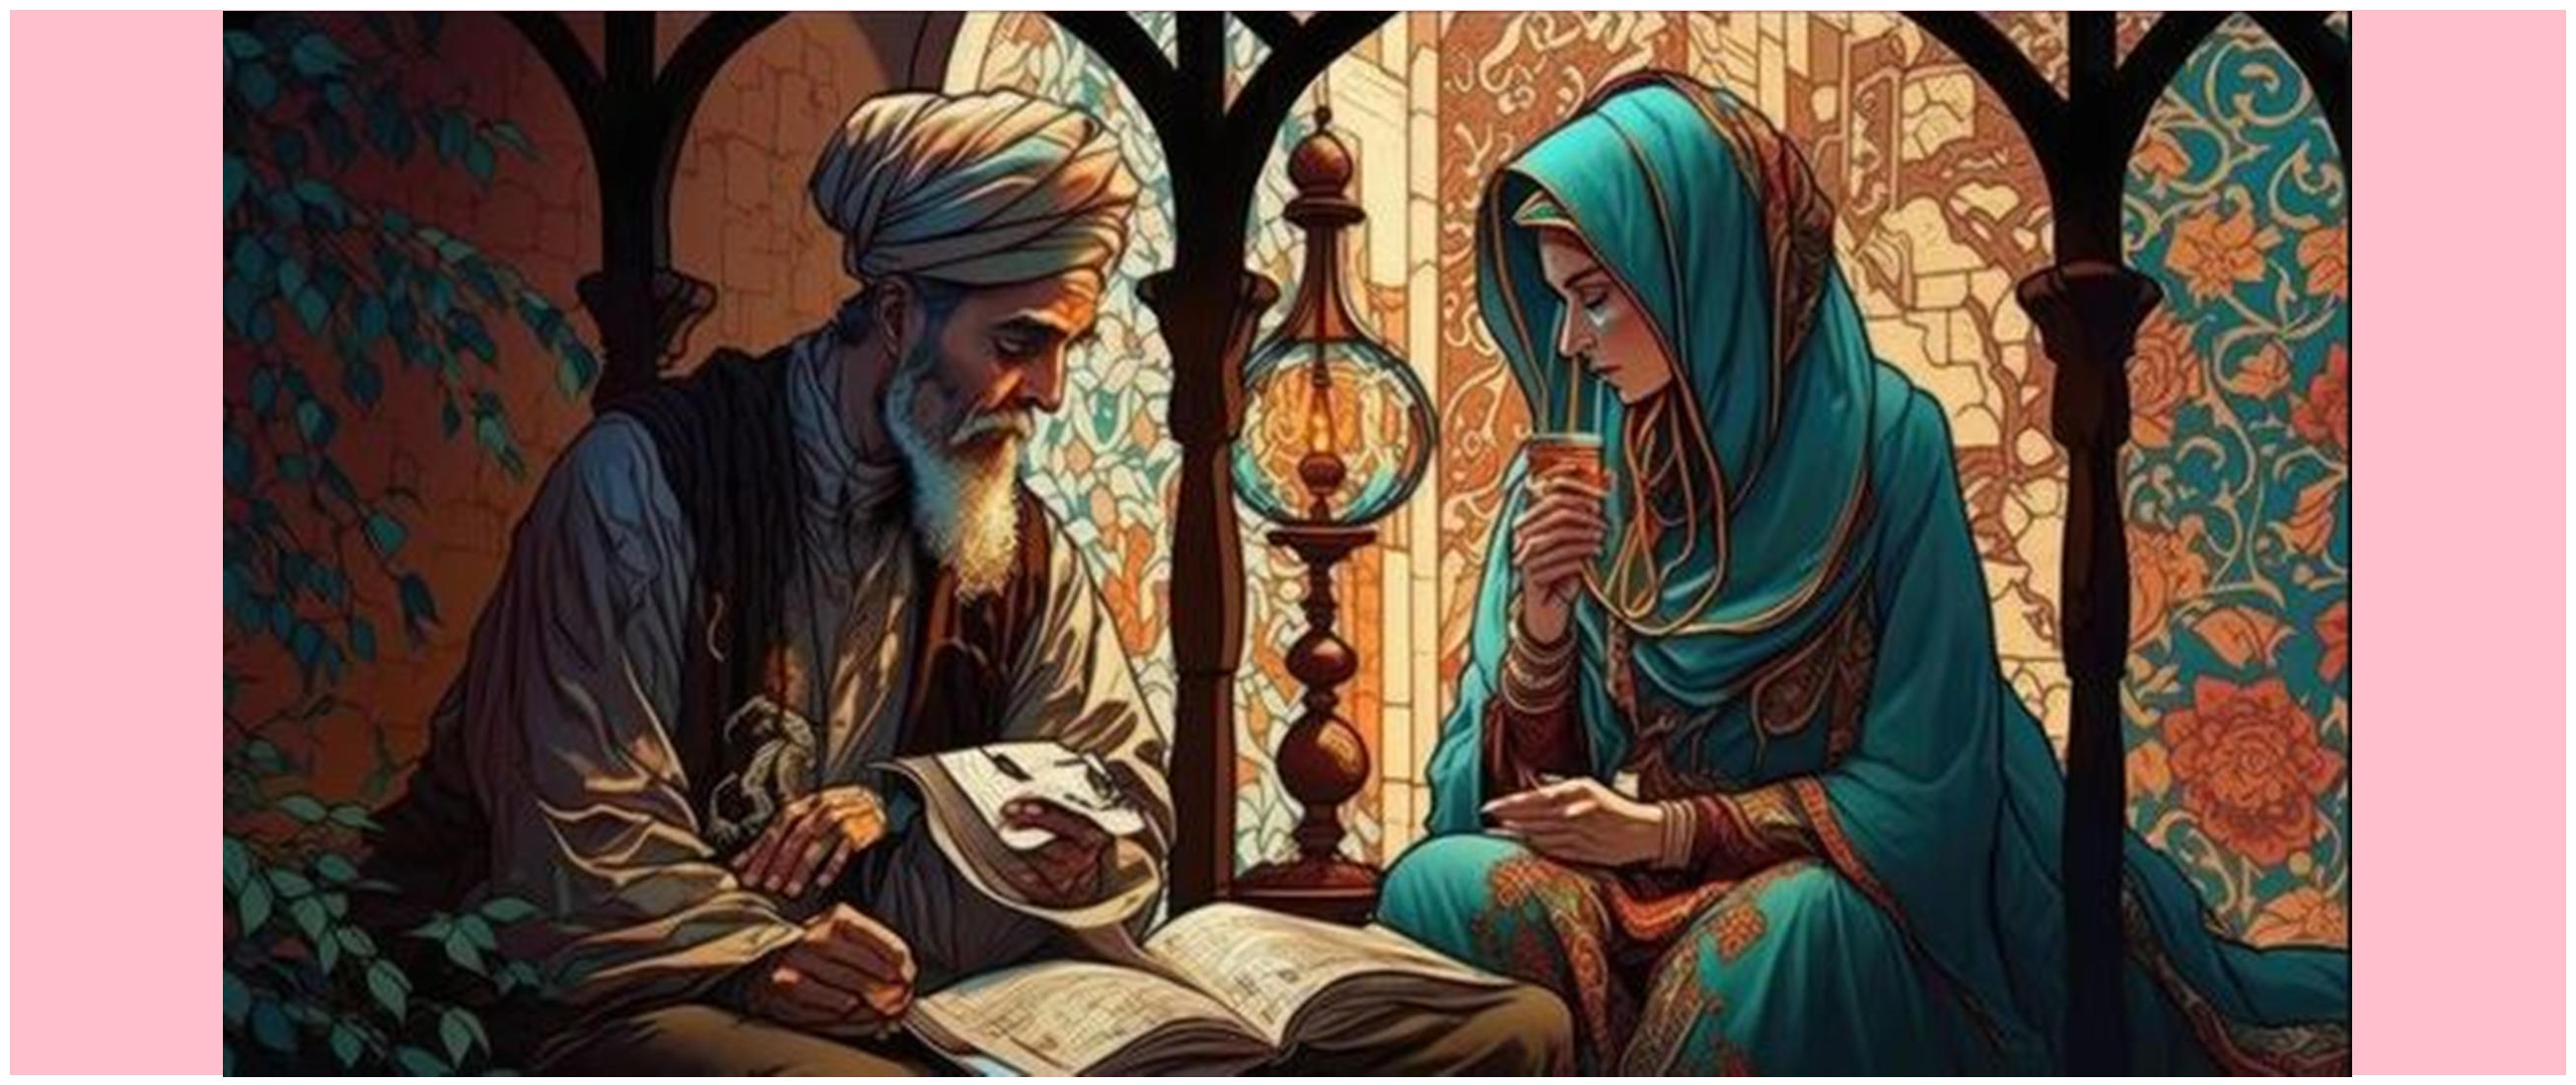 125 Motto hidup Islami tentang ilmu, inspiratif bikin semangat tingkatkan pengetahuan